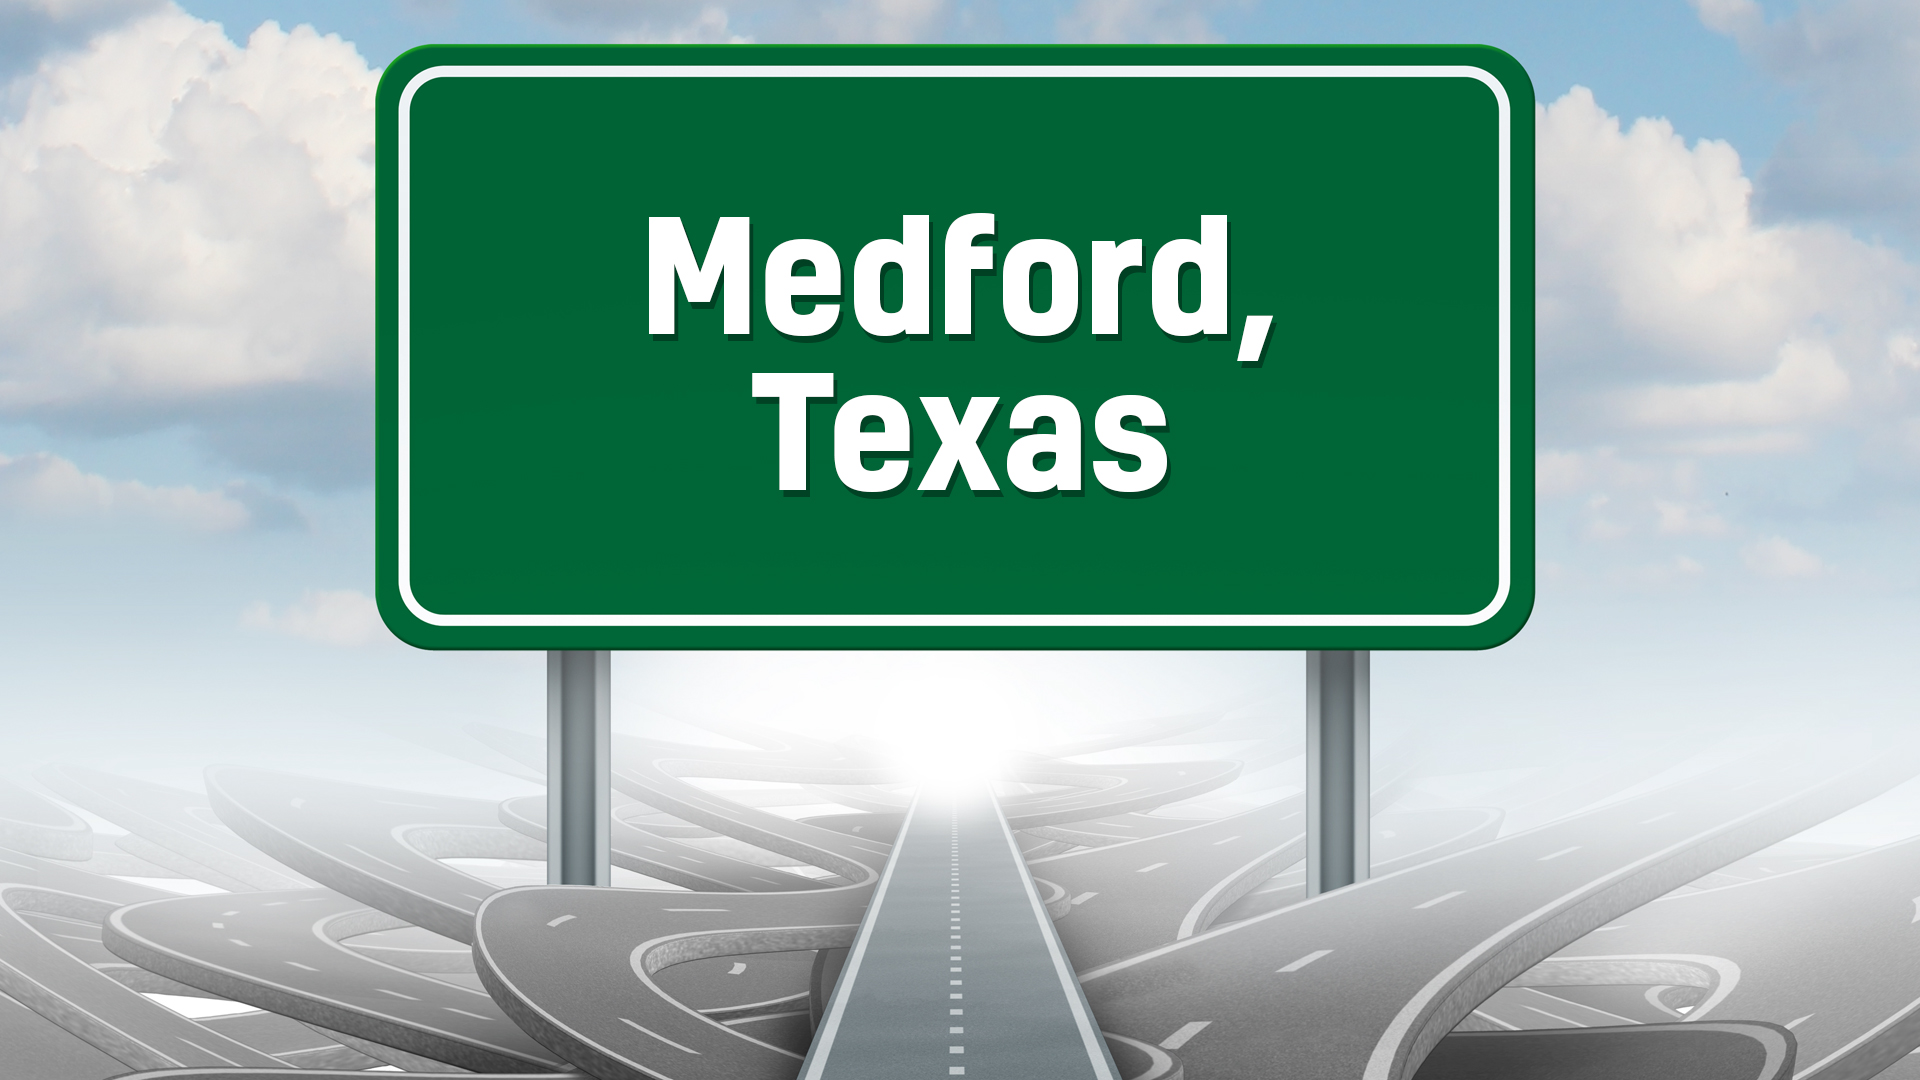 Medford, Texas